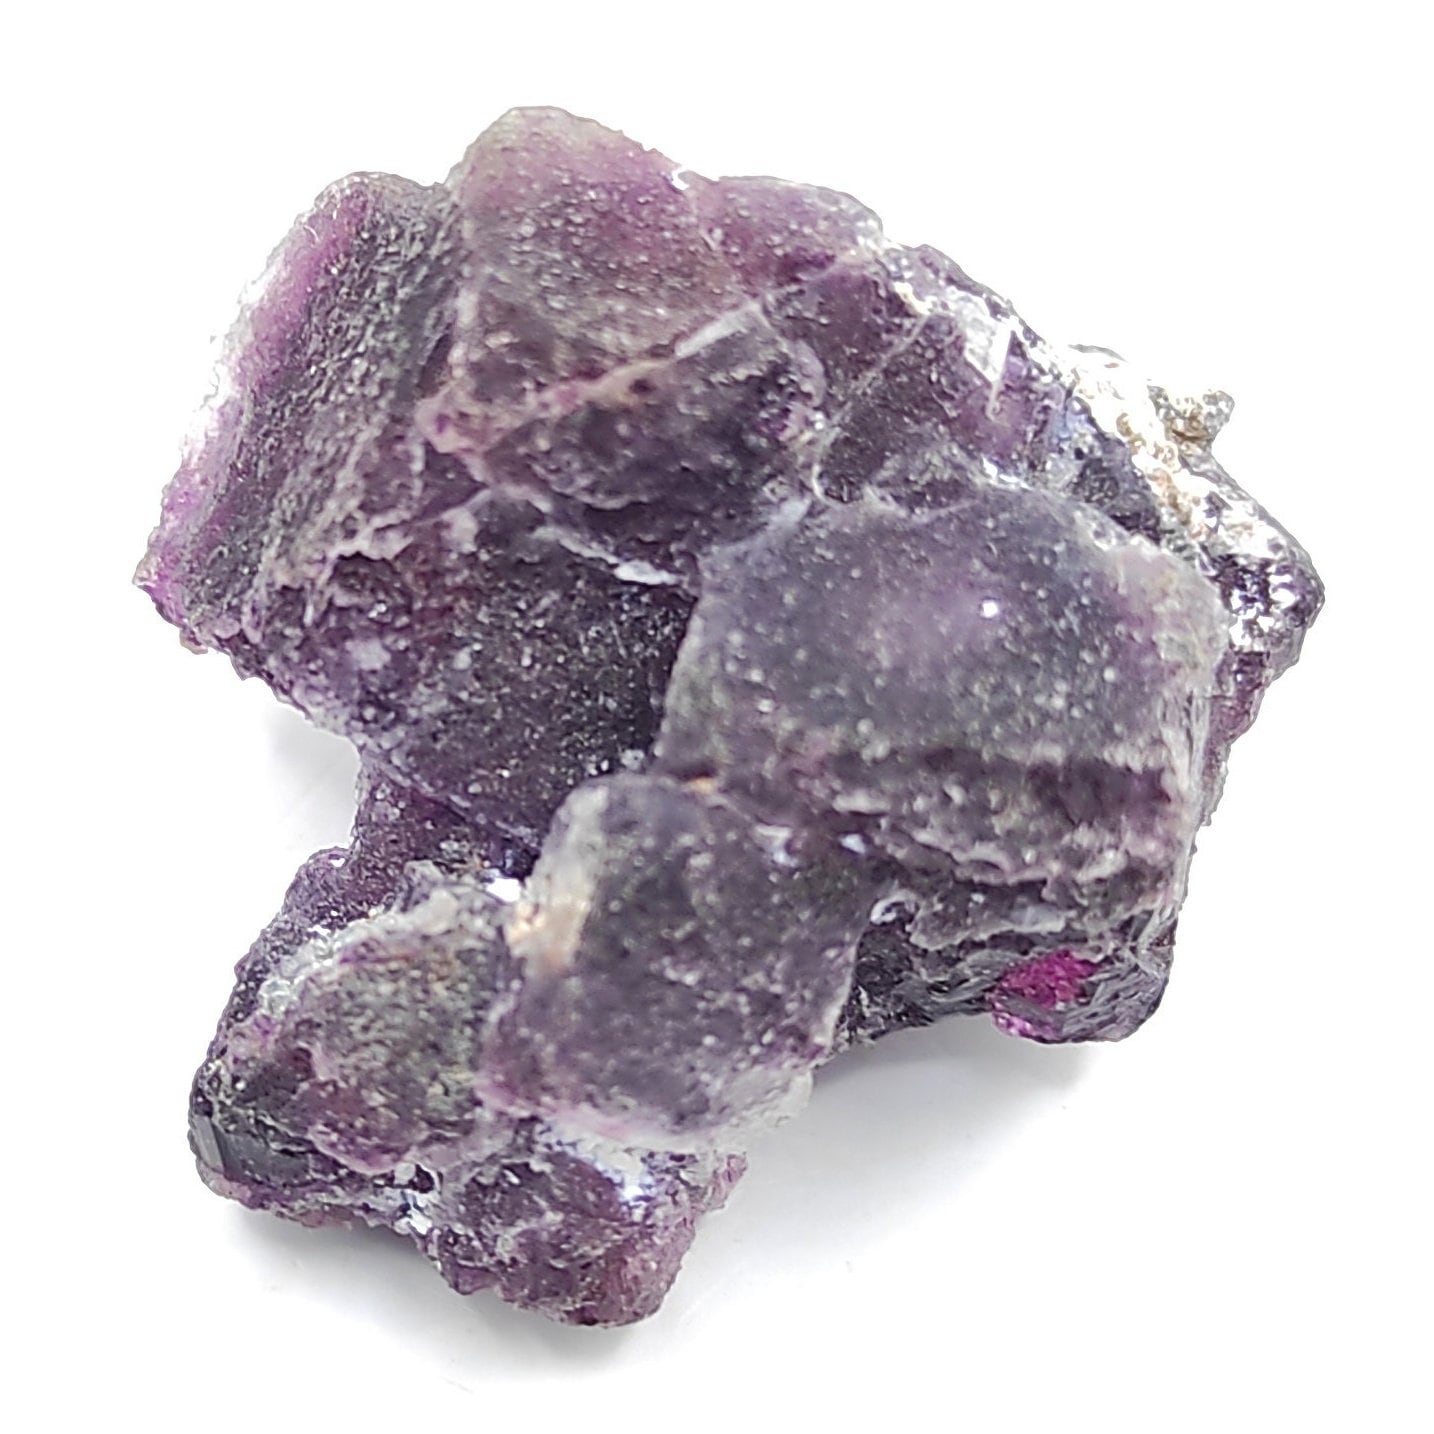 6.61g Mini Erongo Fluorite - Purple Fluorite from Erongo, Namibia - Raw Fluorite Specimen - Natural Minerals Specimen - Deep Purple Fluorite